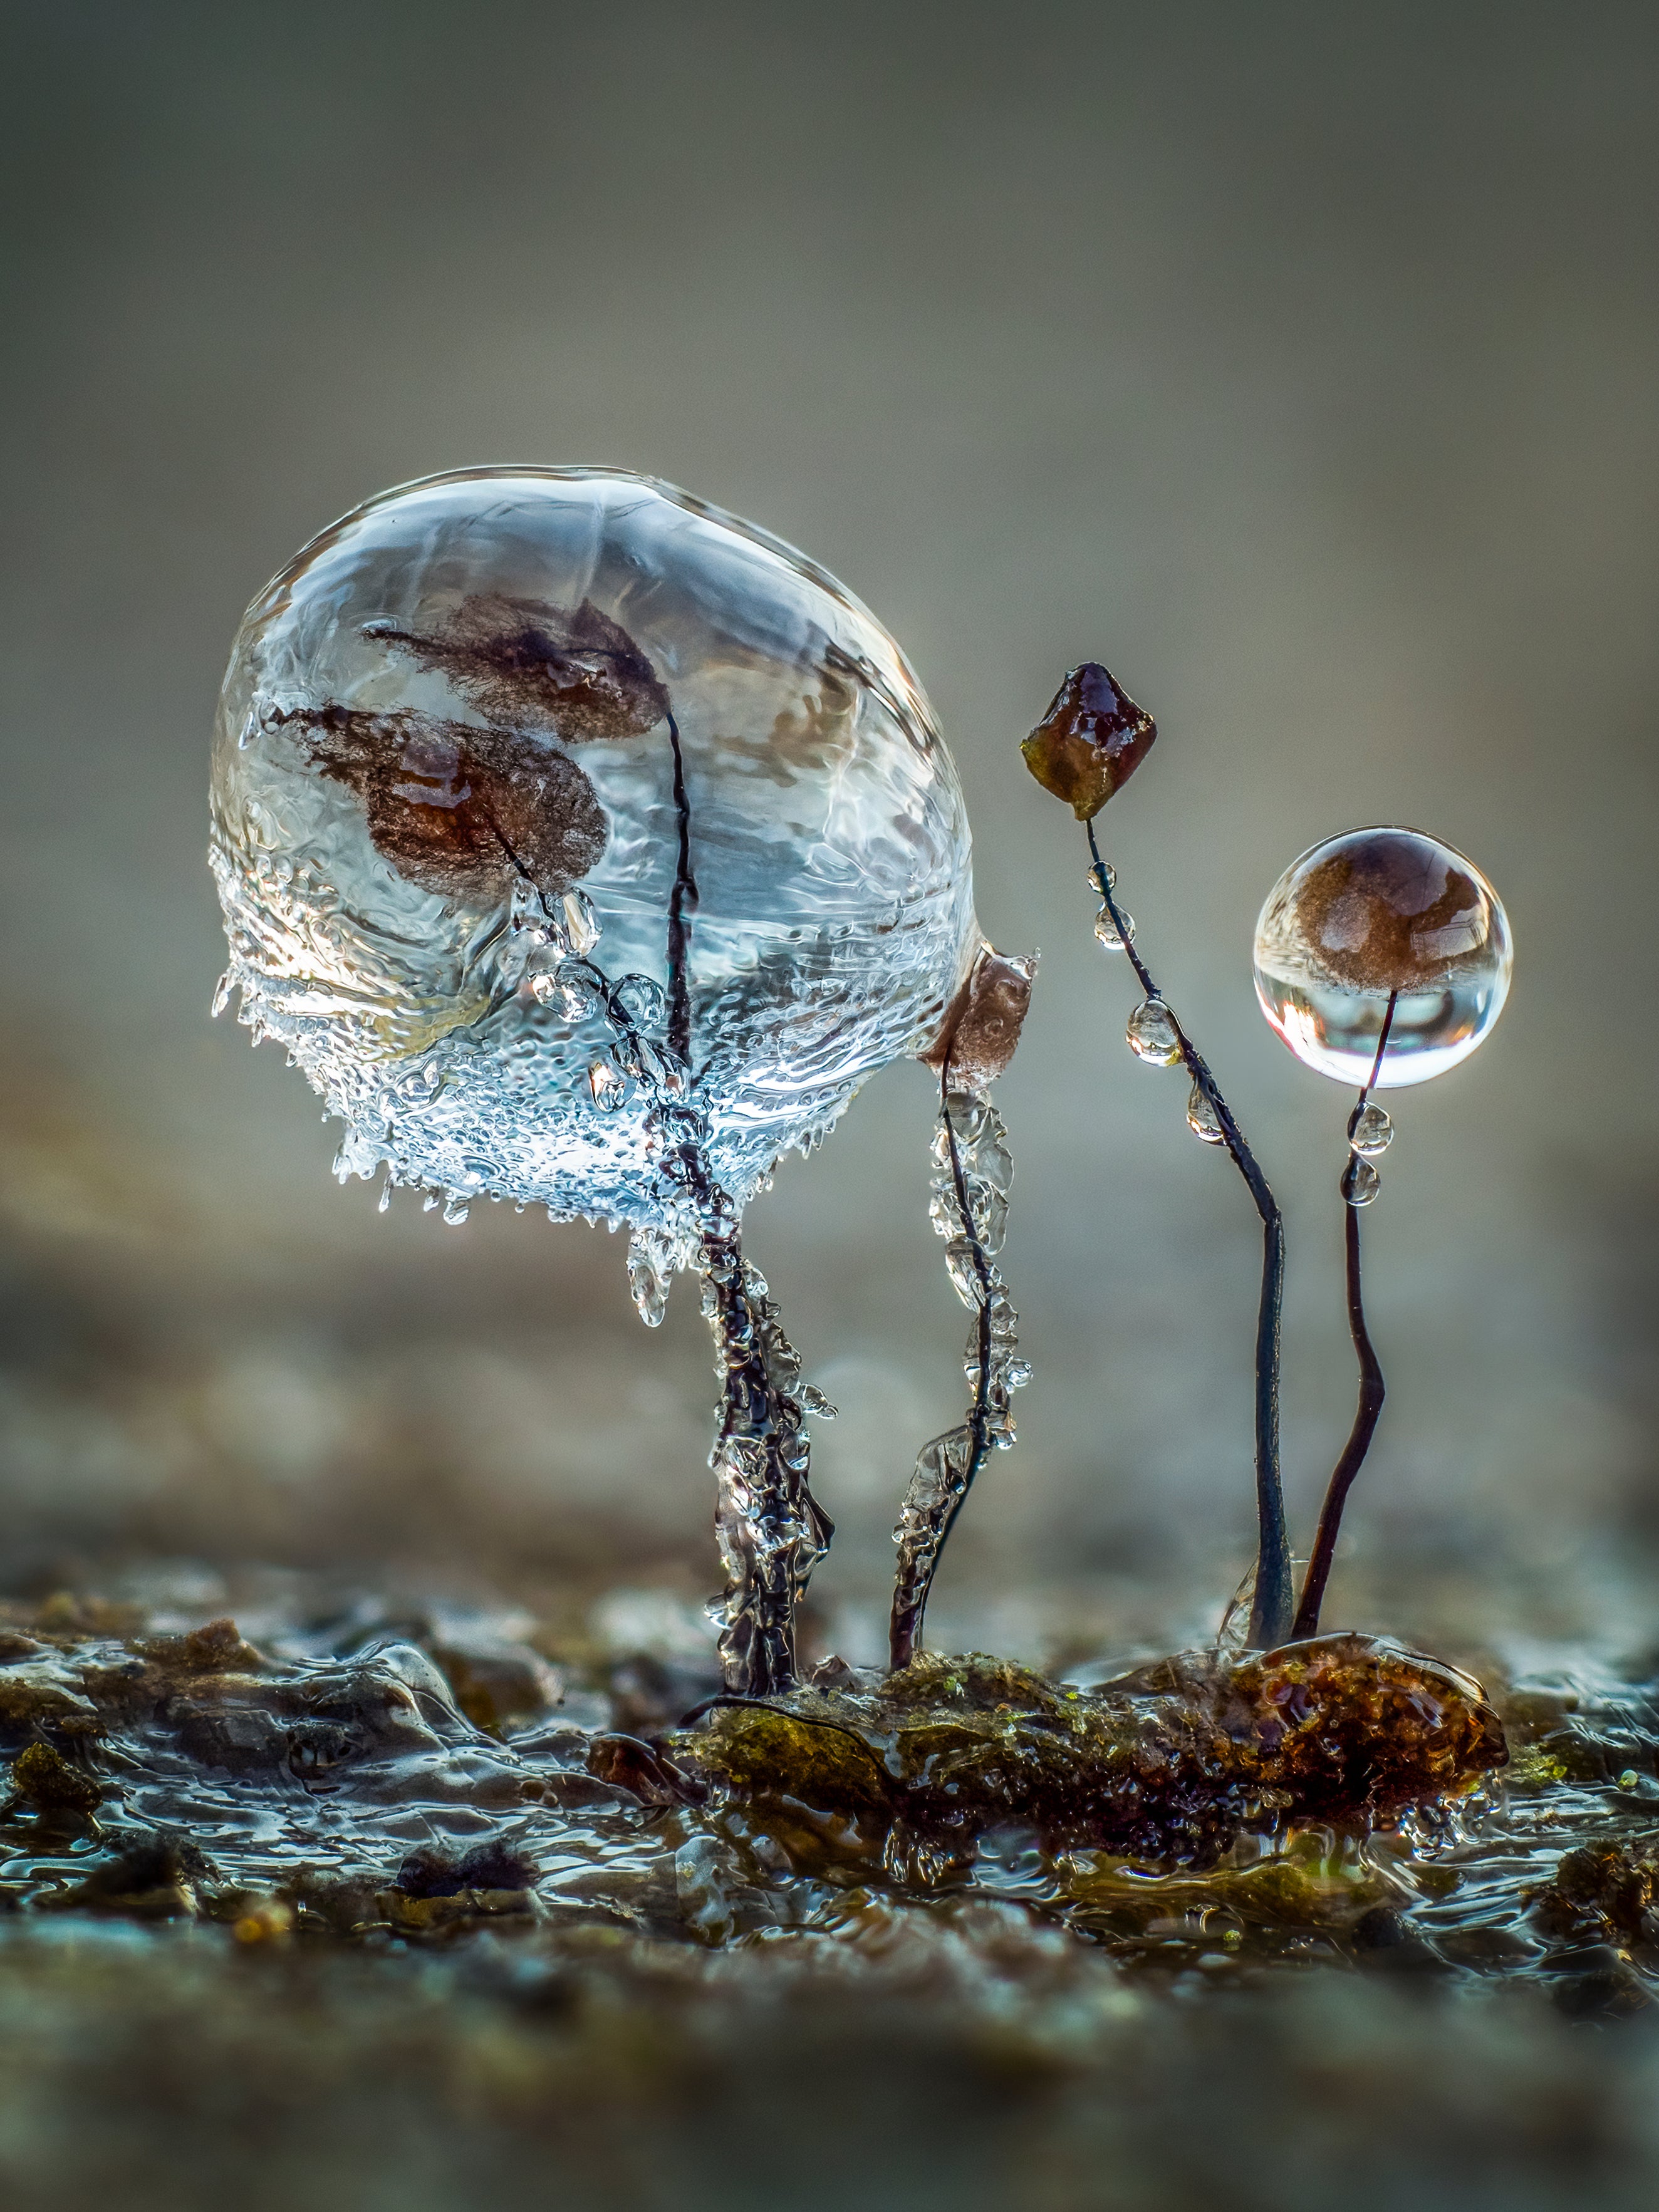 Comatricha fungi encased in ice. (Photo: Barry Webb)